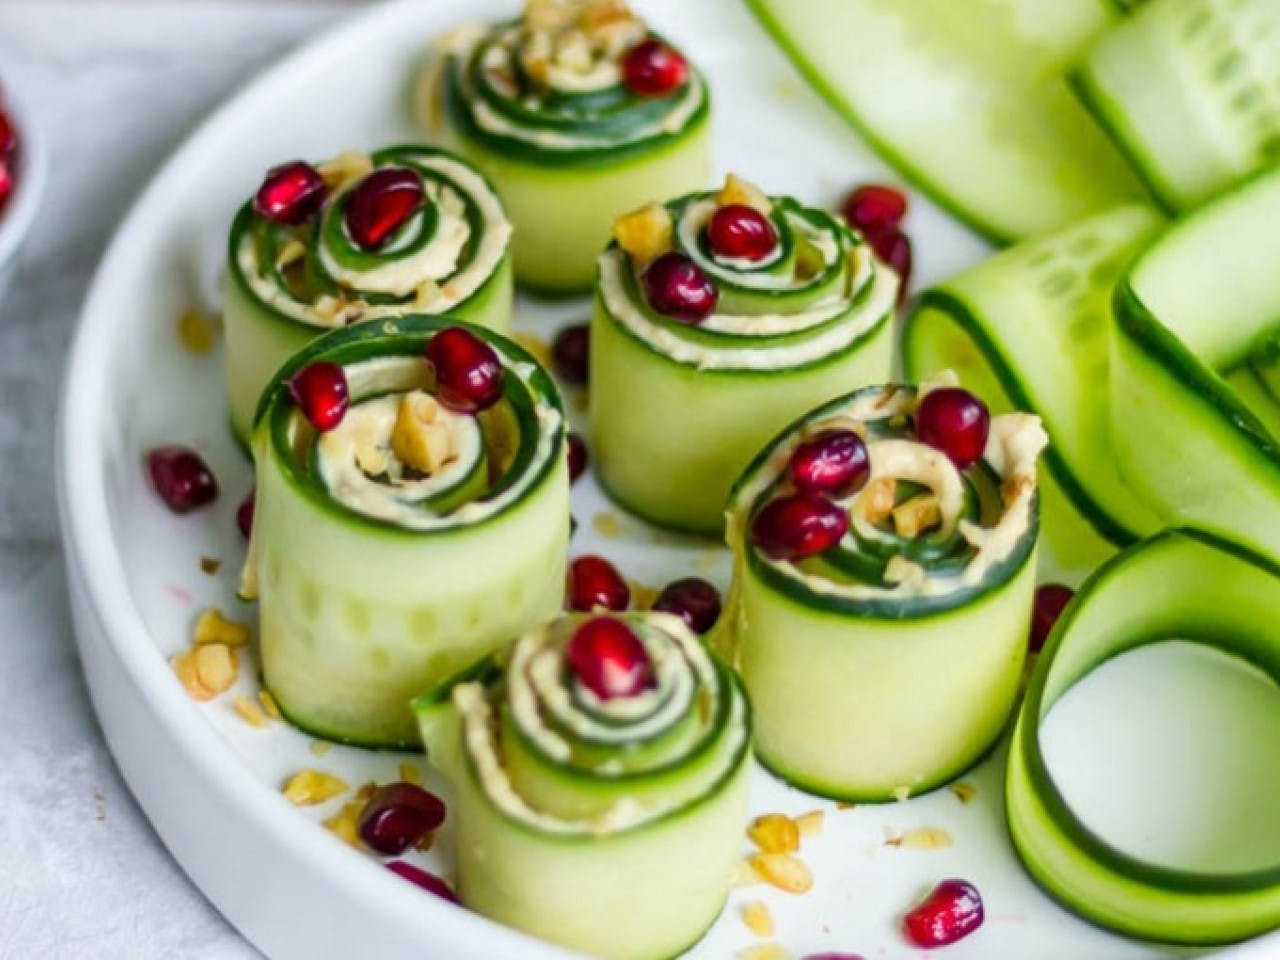 Cucumber rolls with hummus